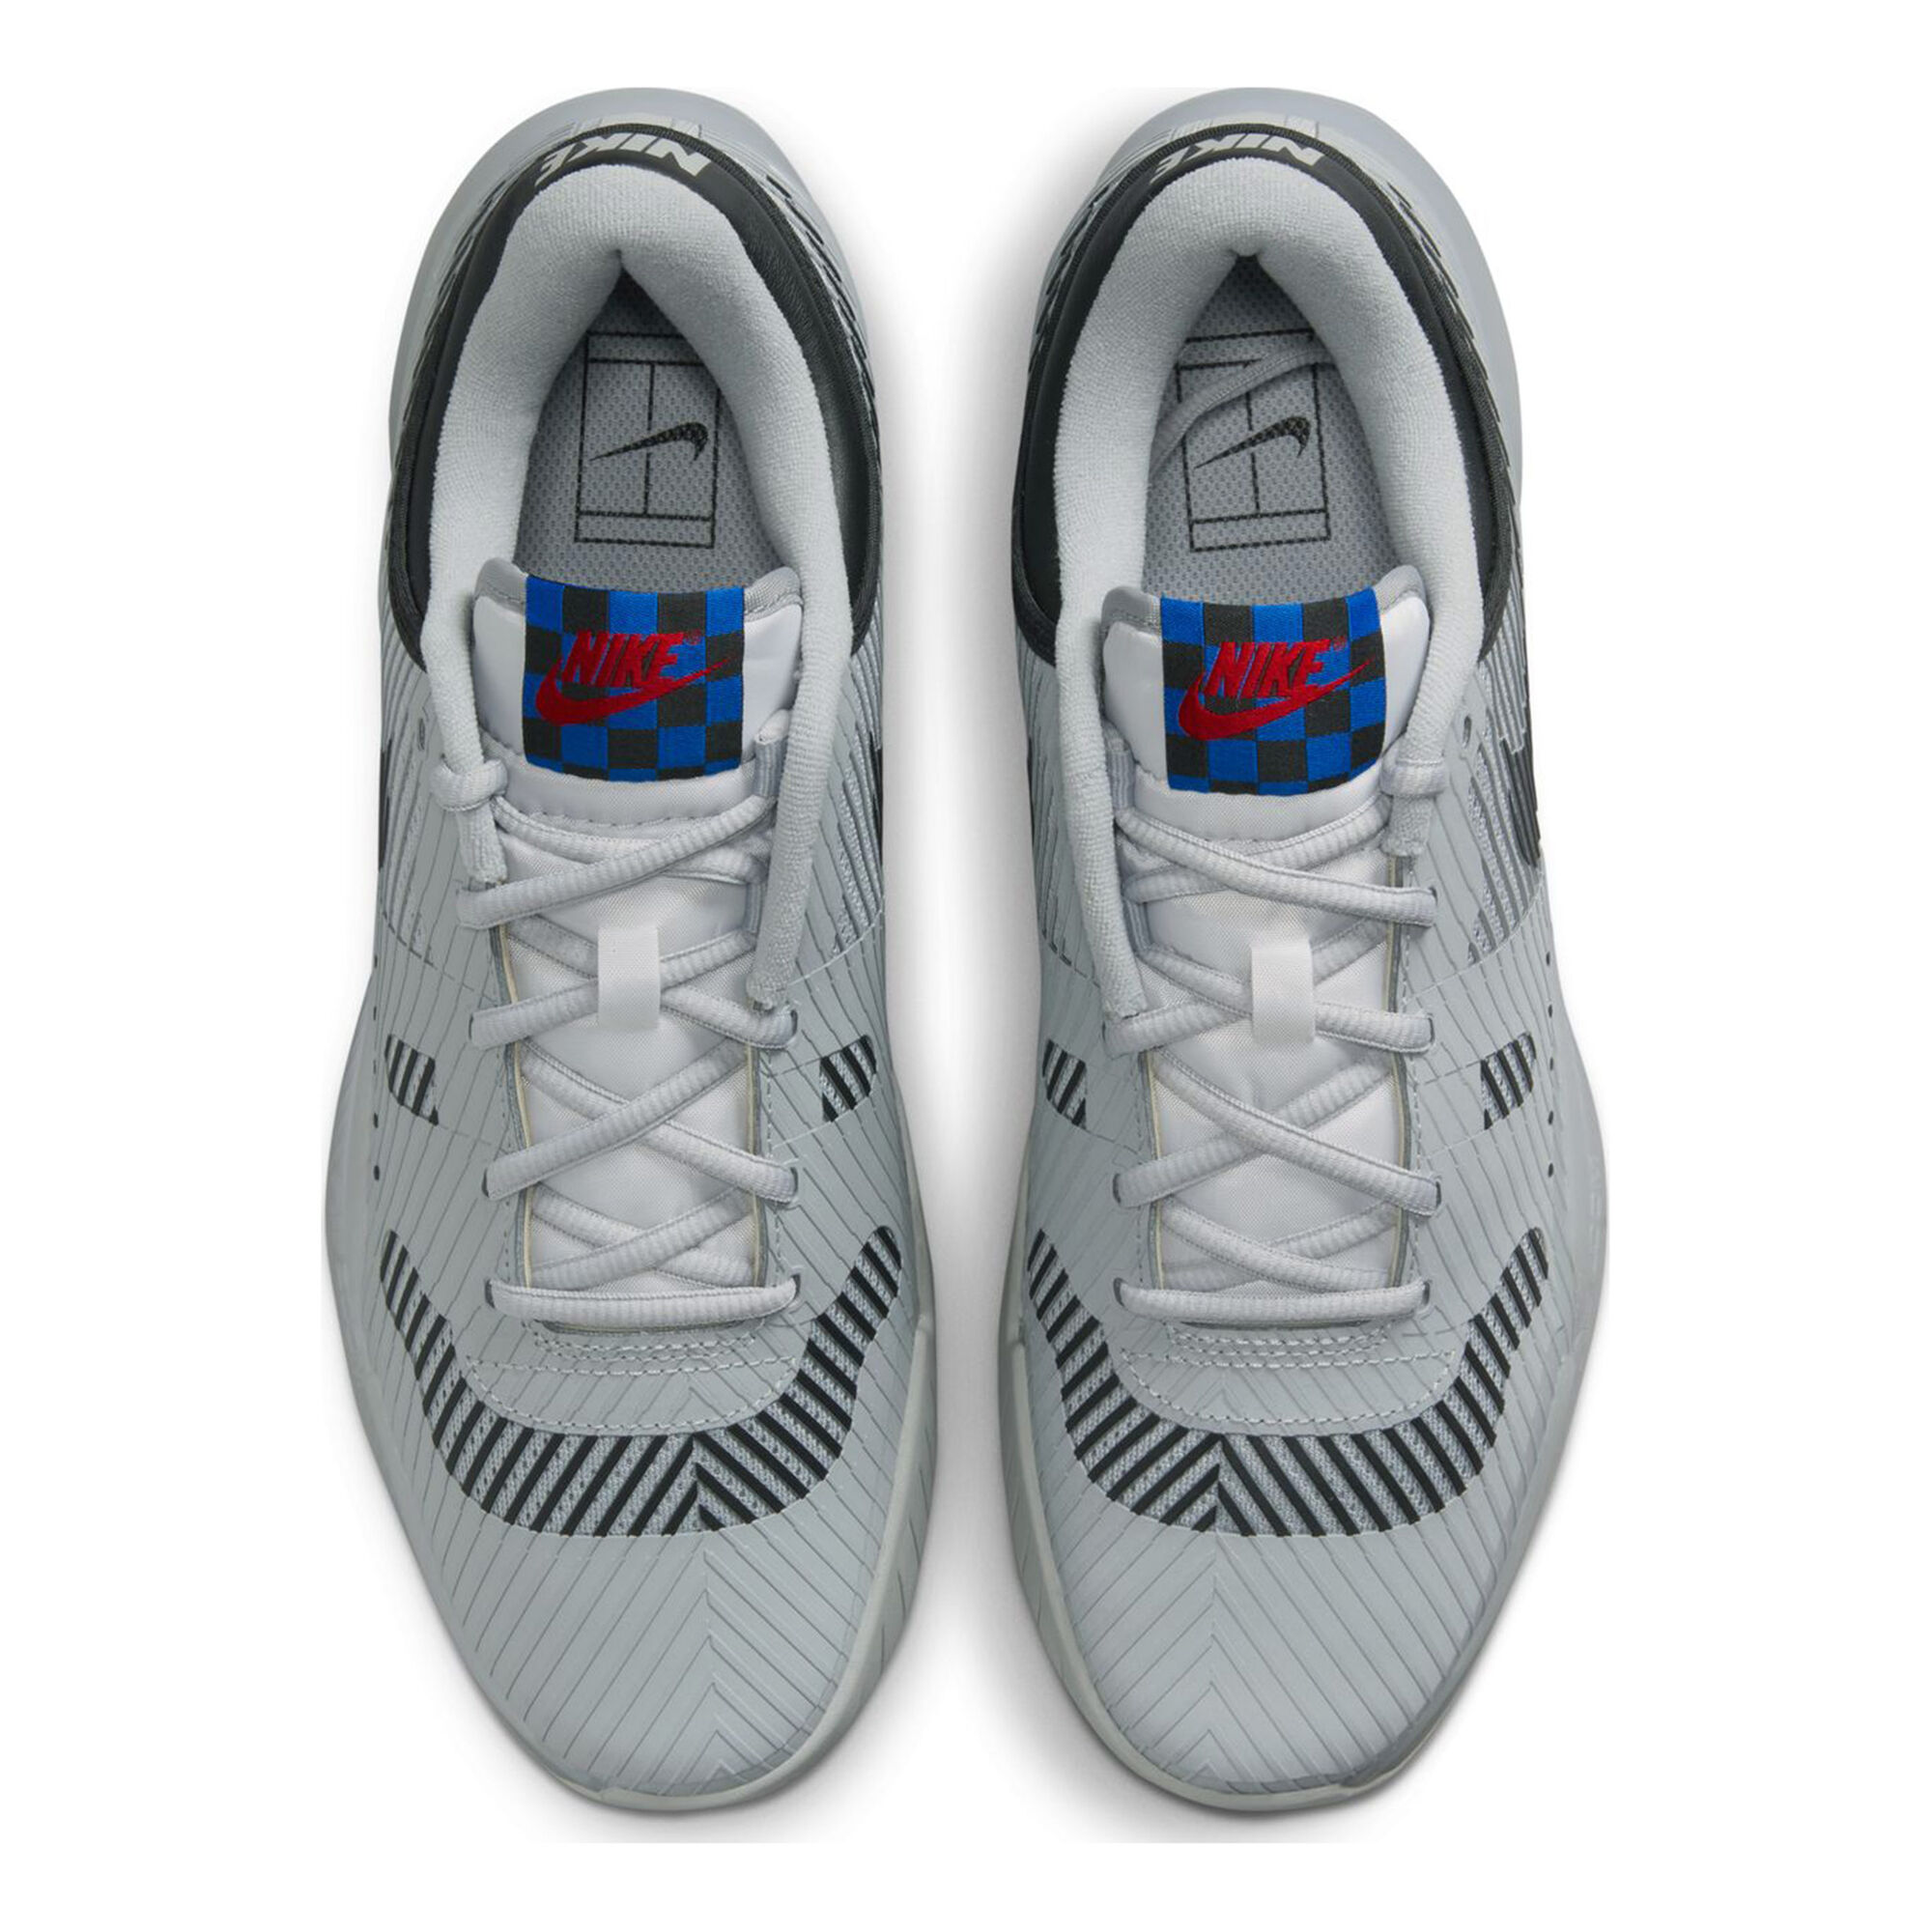 Buy Nike Air Zoom Vapor 11 Chaussures Toutes Surfaces Hommes Noir